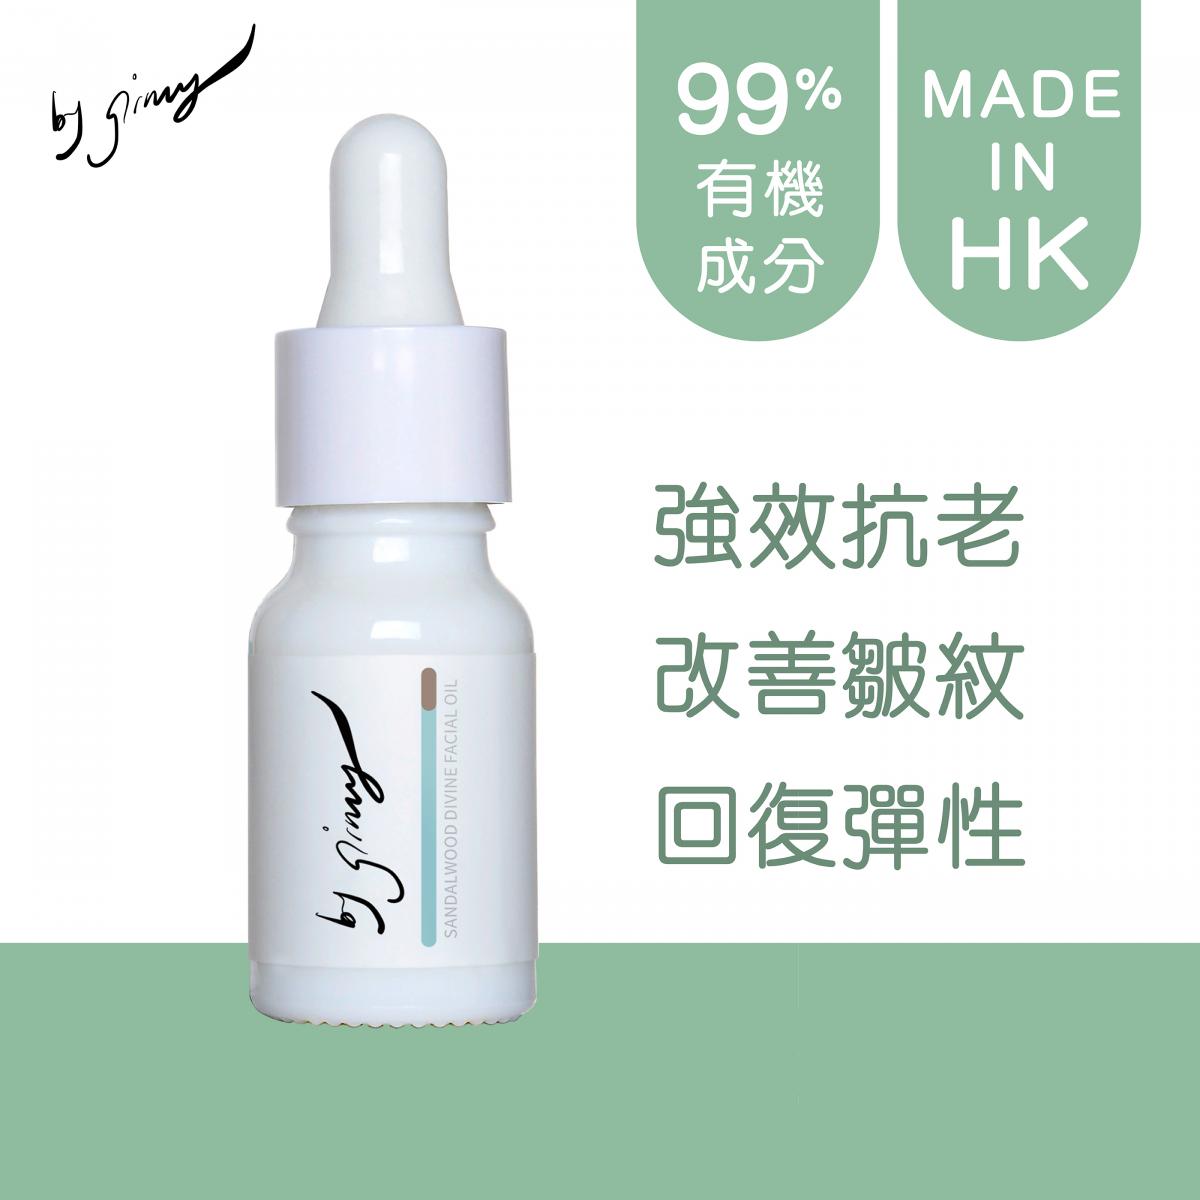 Sandalwood divine facial oil (Made in HK | No parabens | Normal shelf life:6-8 mths)